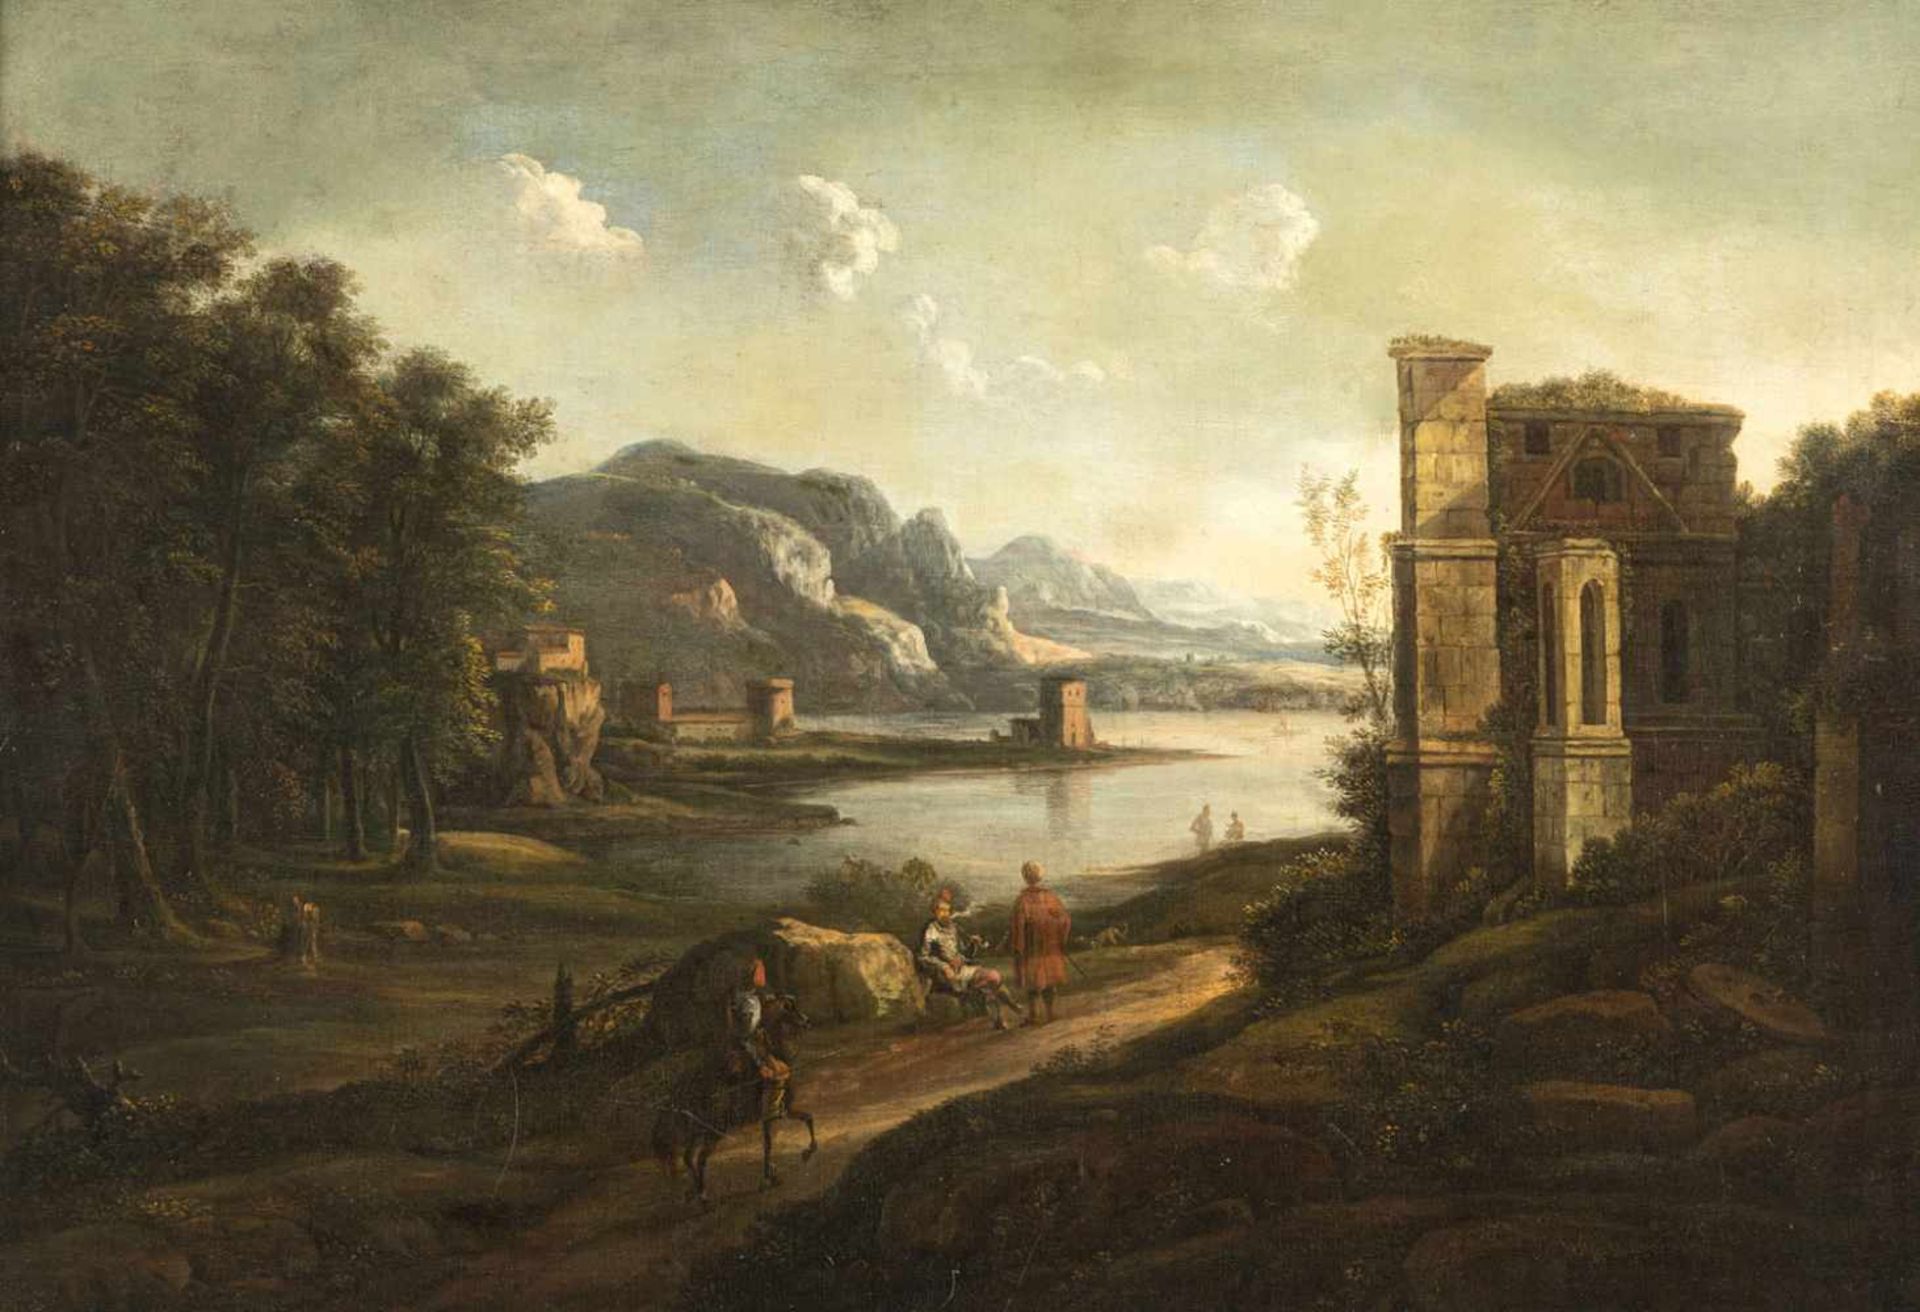 BEMMEL, WILHELM VON (circle, 1630-1708). Extensive river landscape with ruins and travellers. Oil/